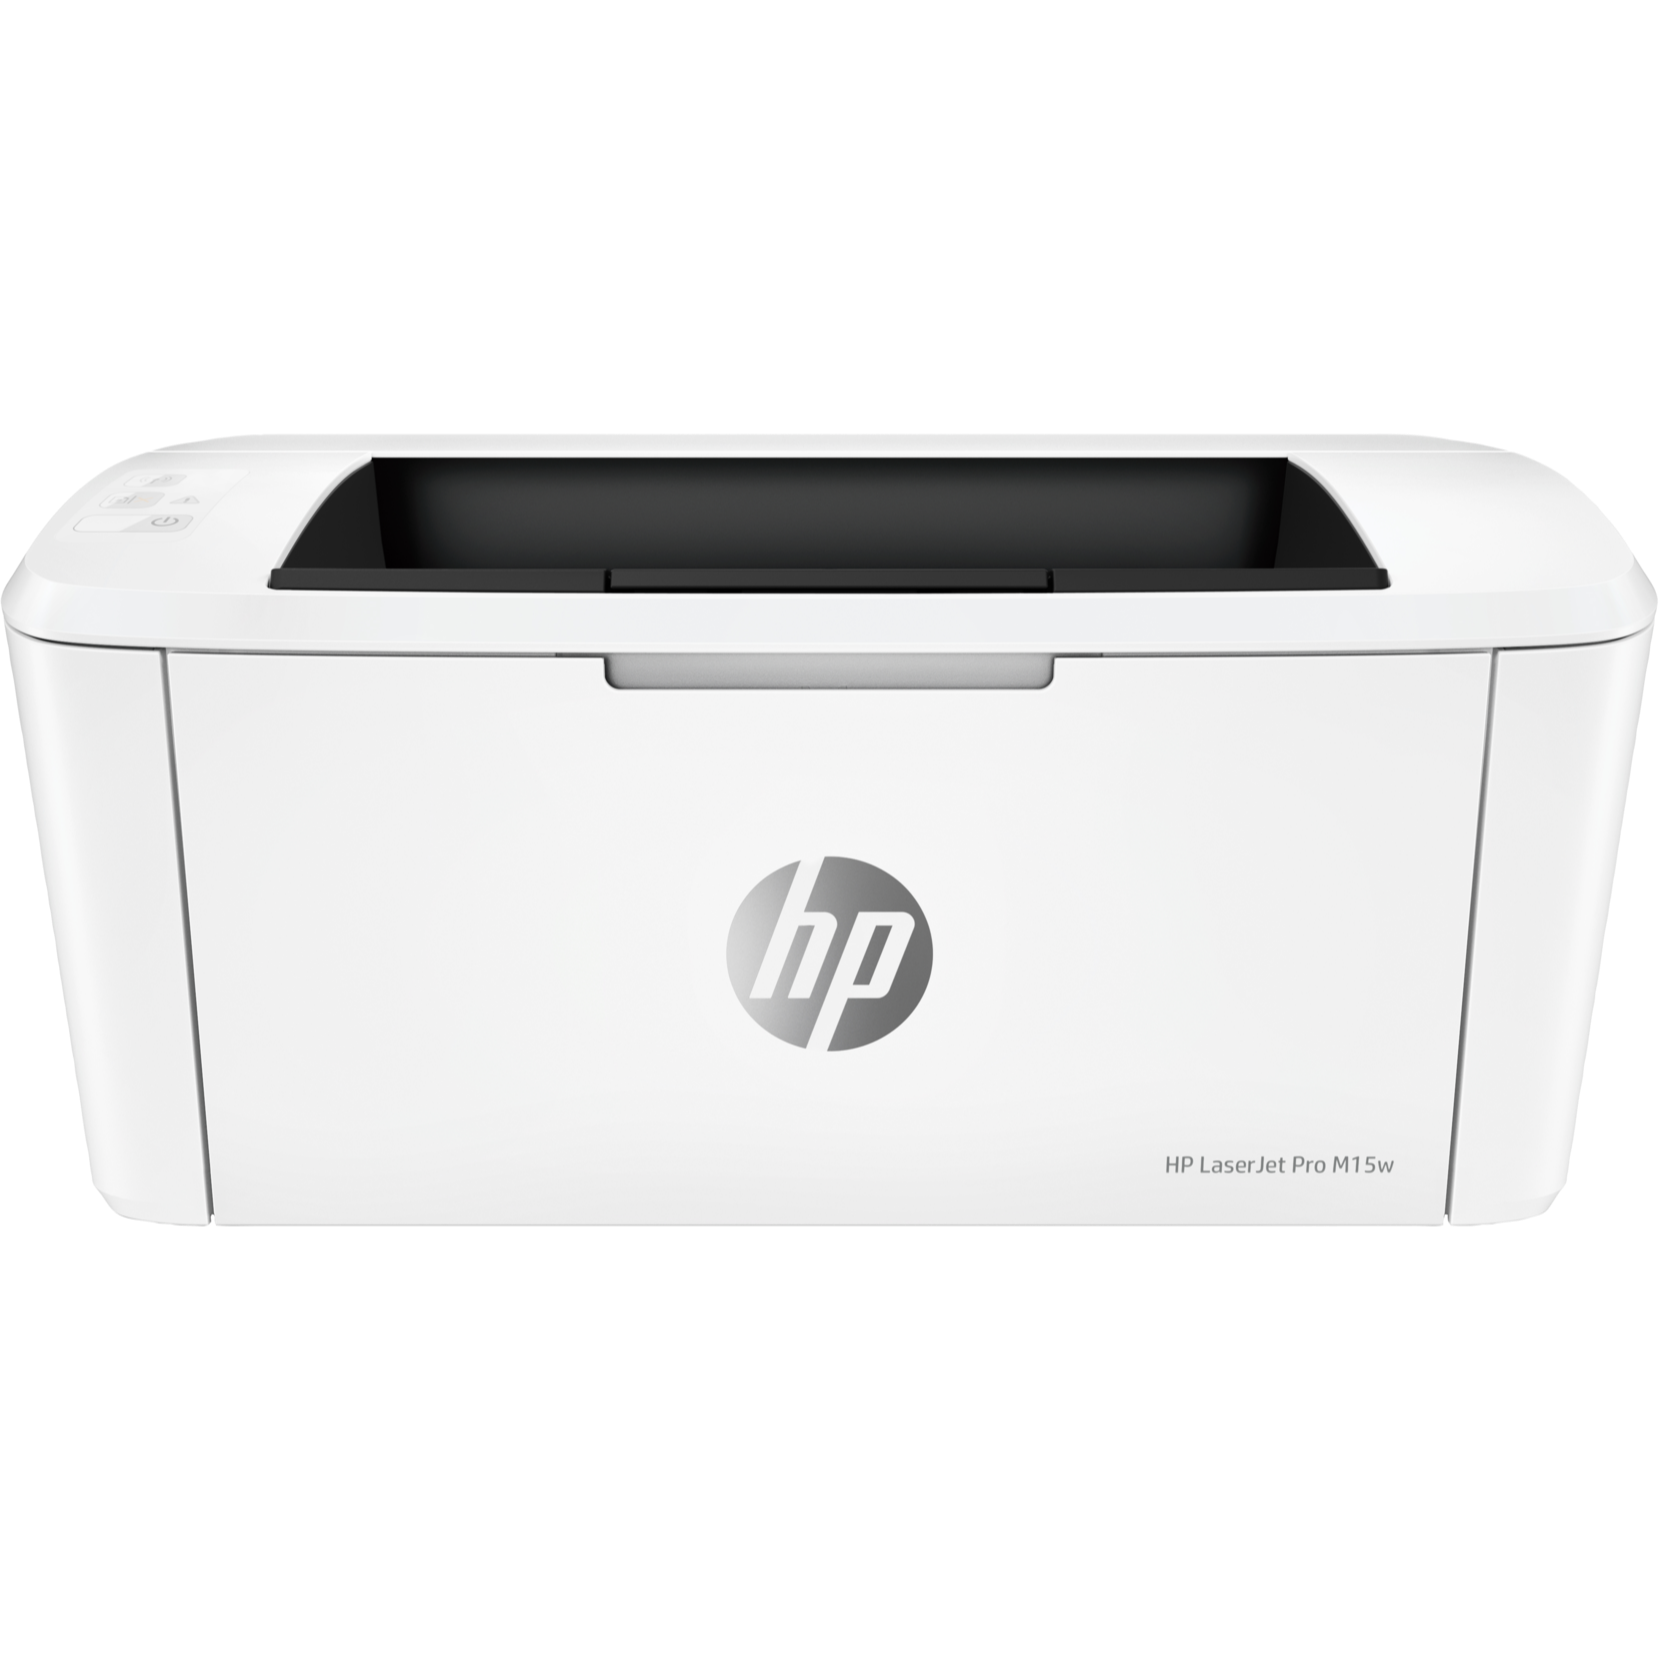 HP LaserJet Pro M15w Wireless Monochrome Printer Accessories 5